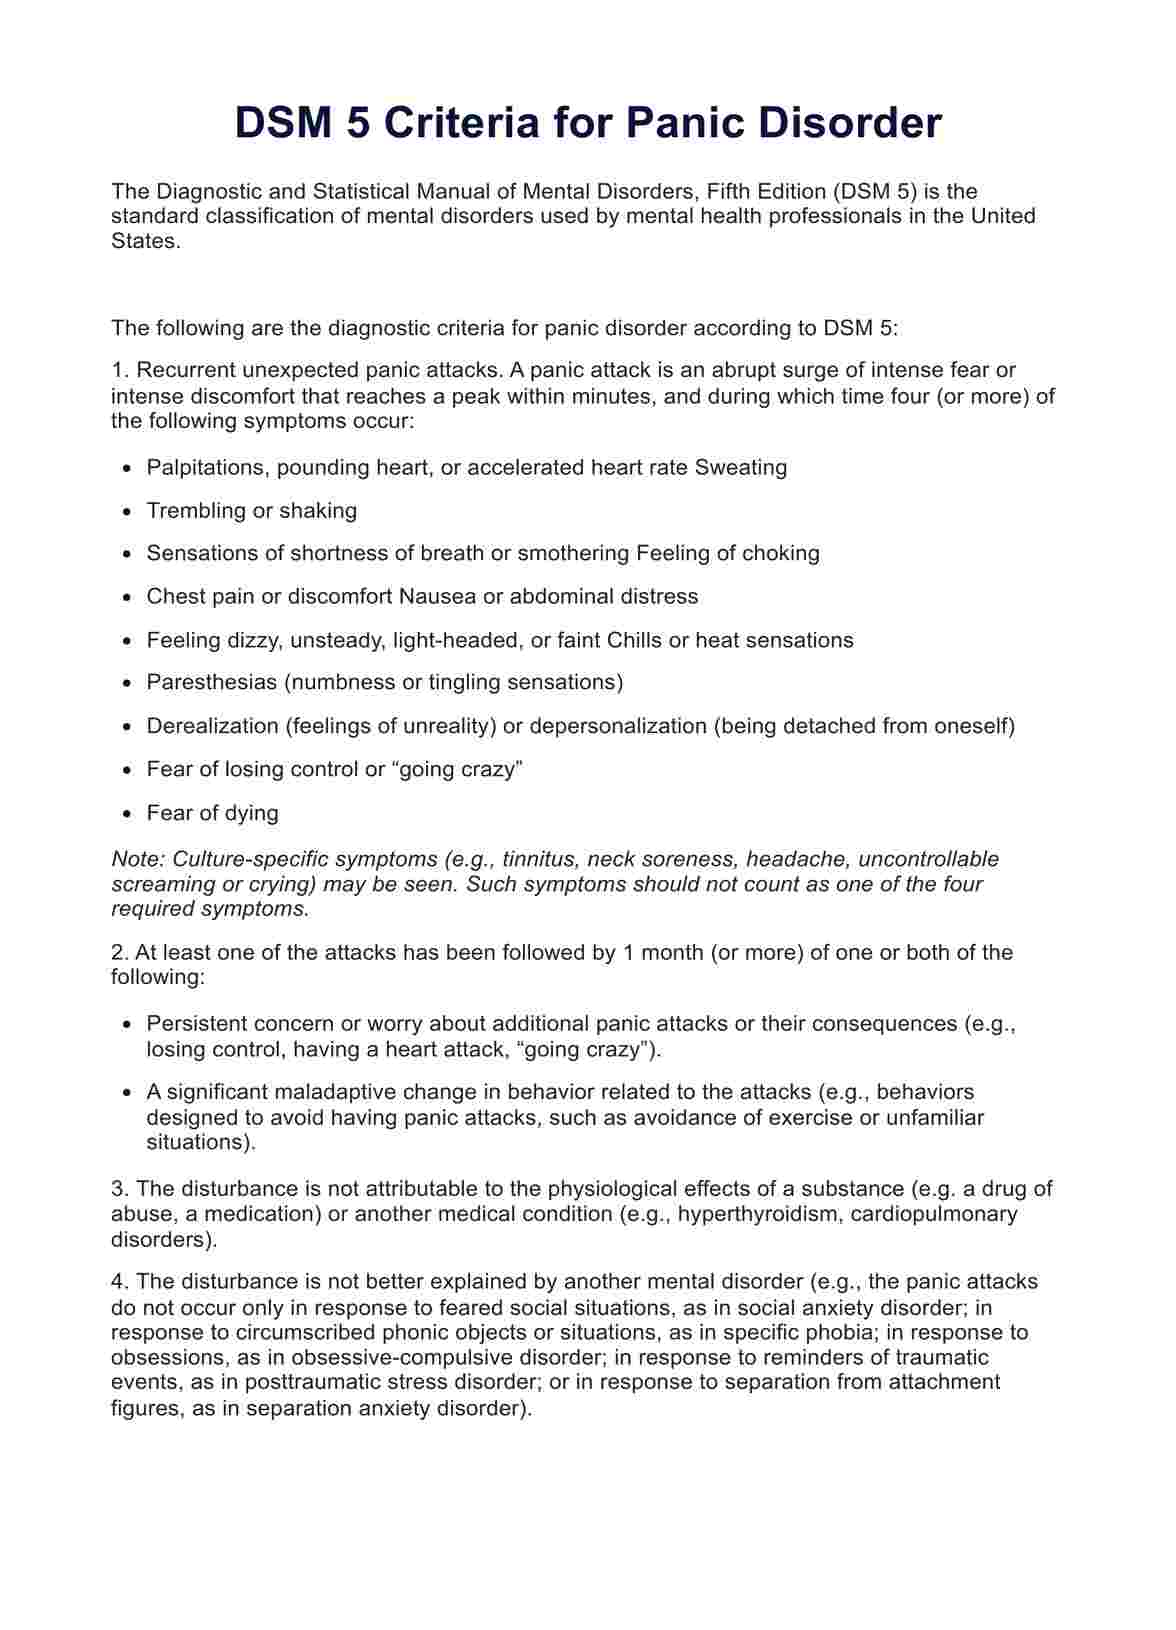 DSM 5 Criteria for Panic Disorder PDF Example